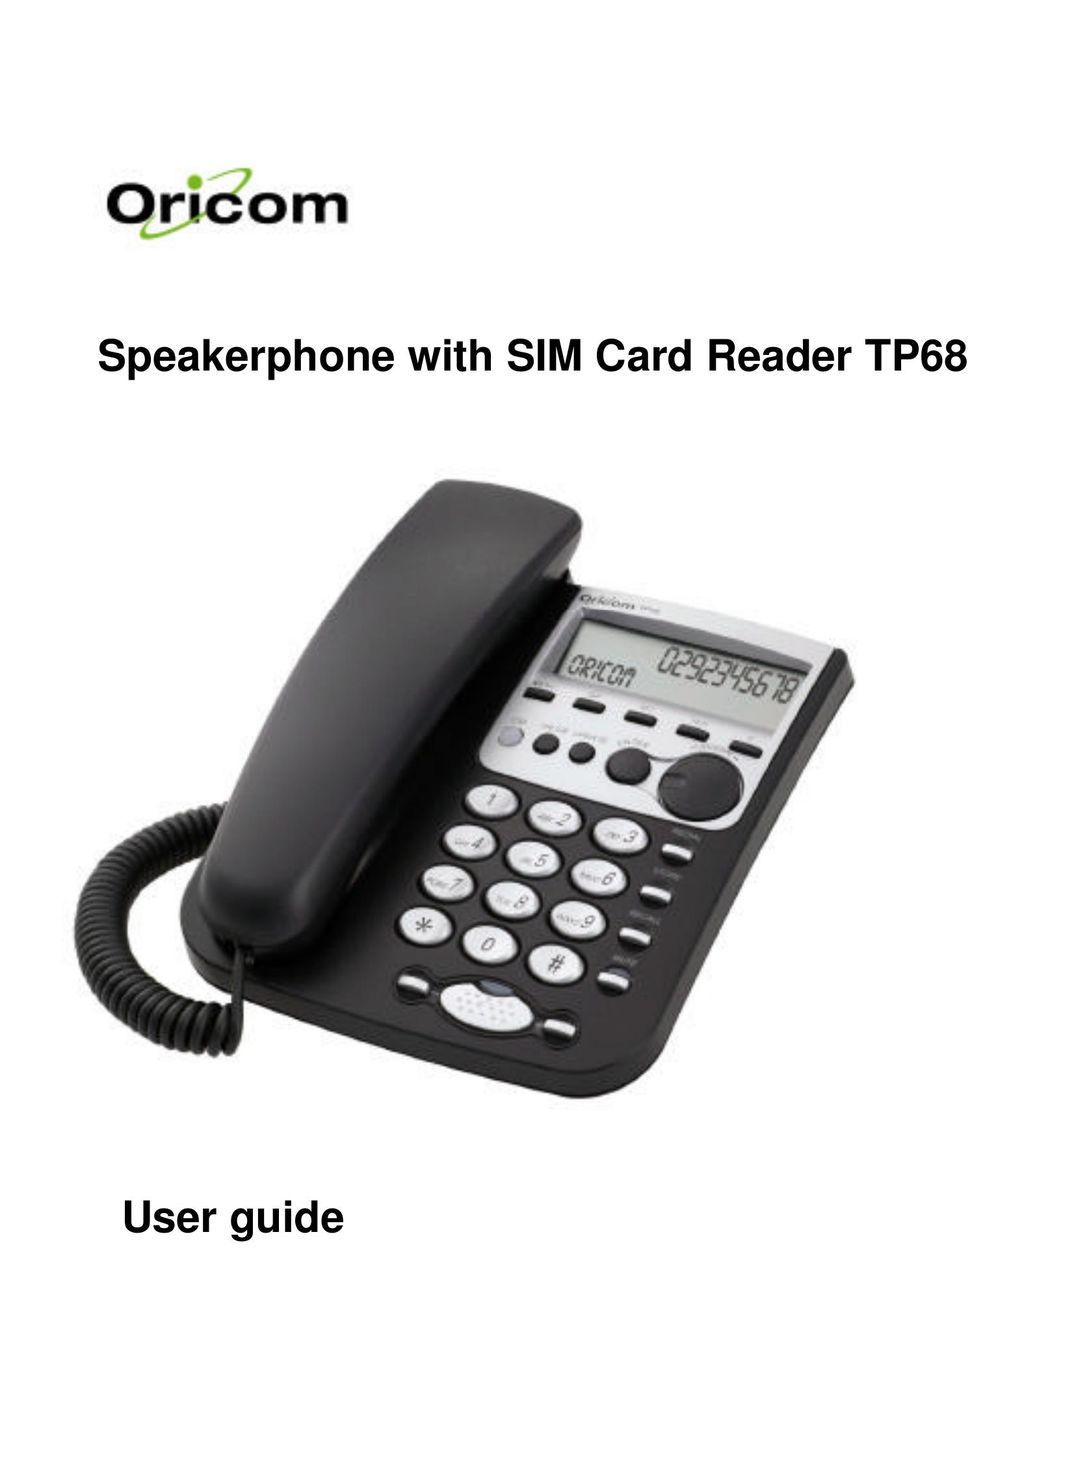 Oricom TP68 Telephone User Manual